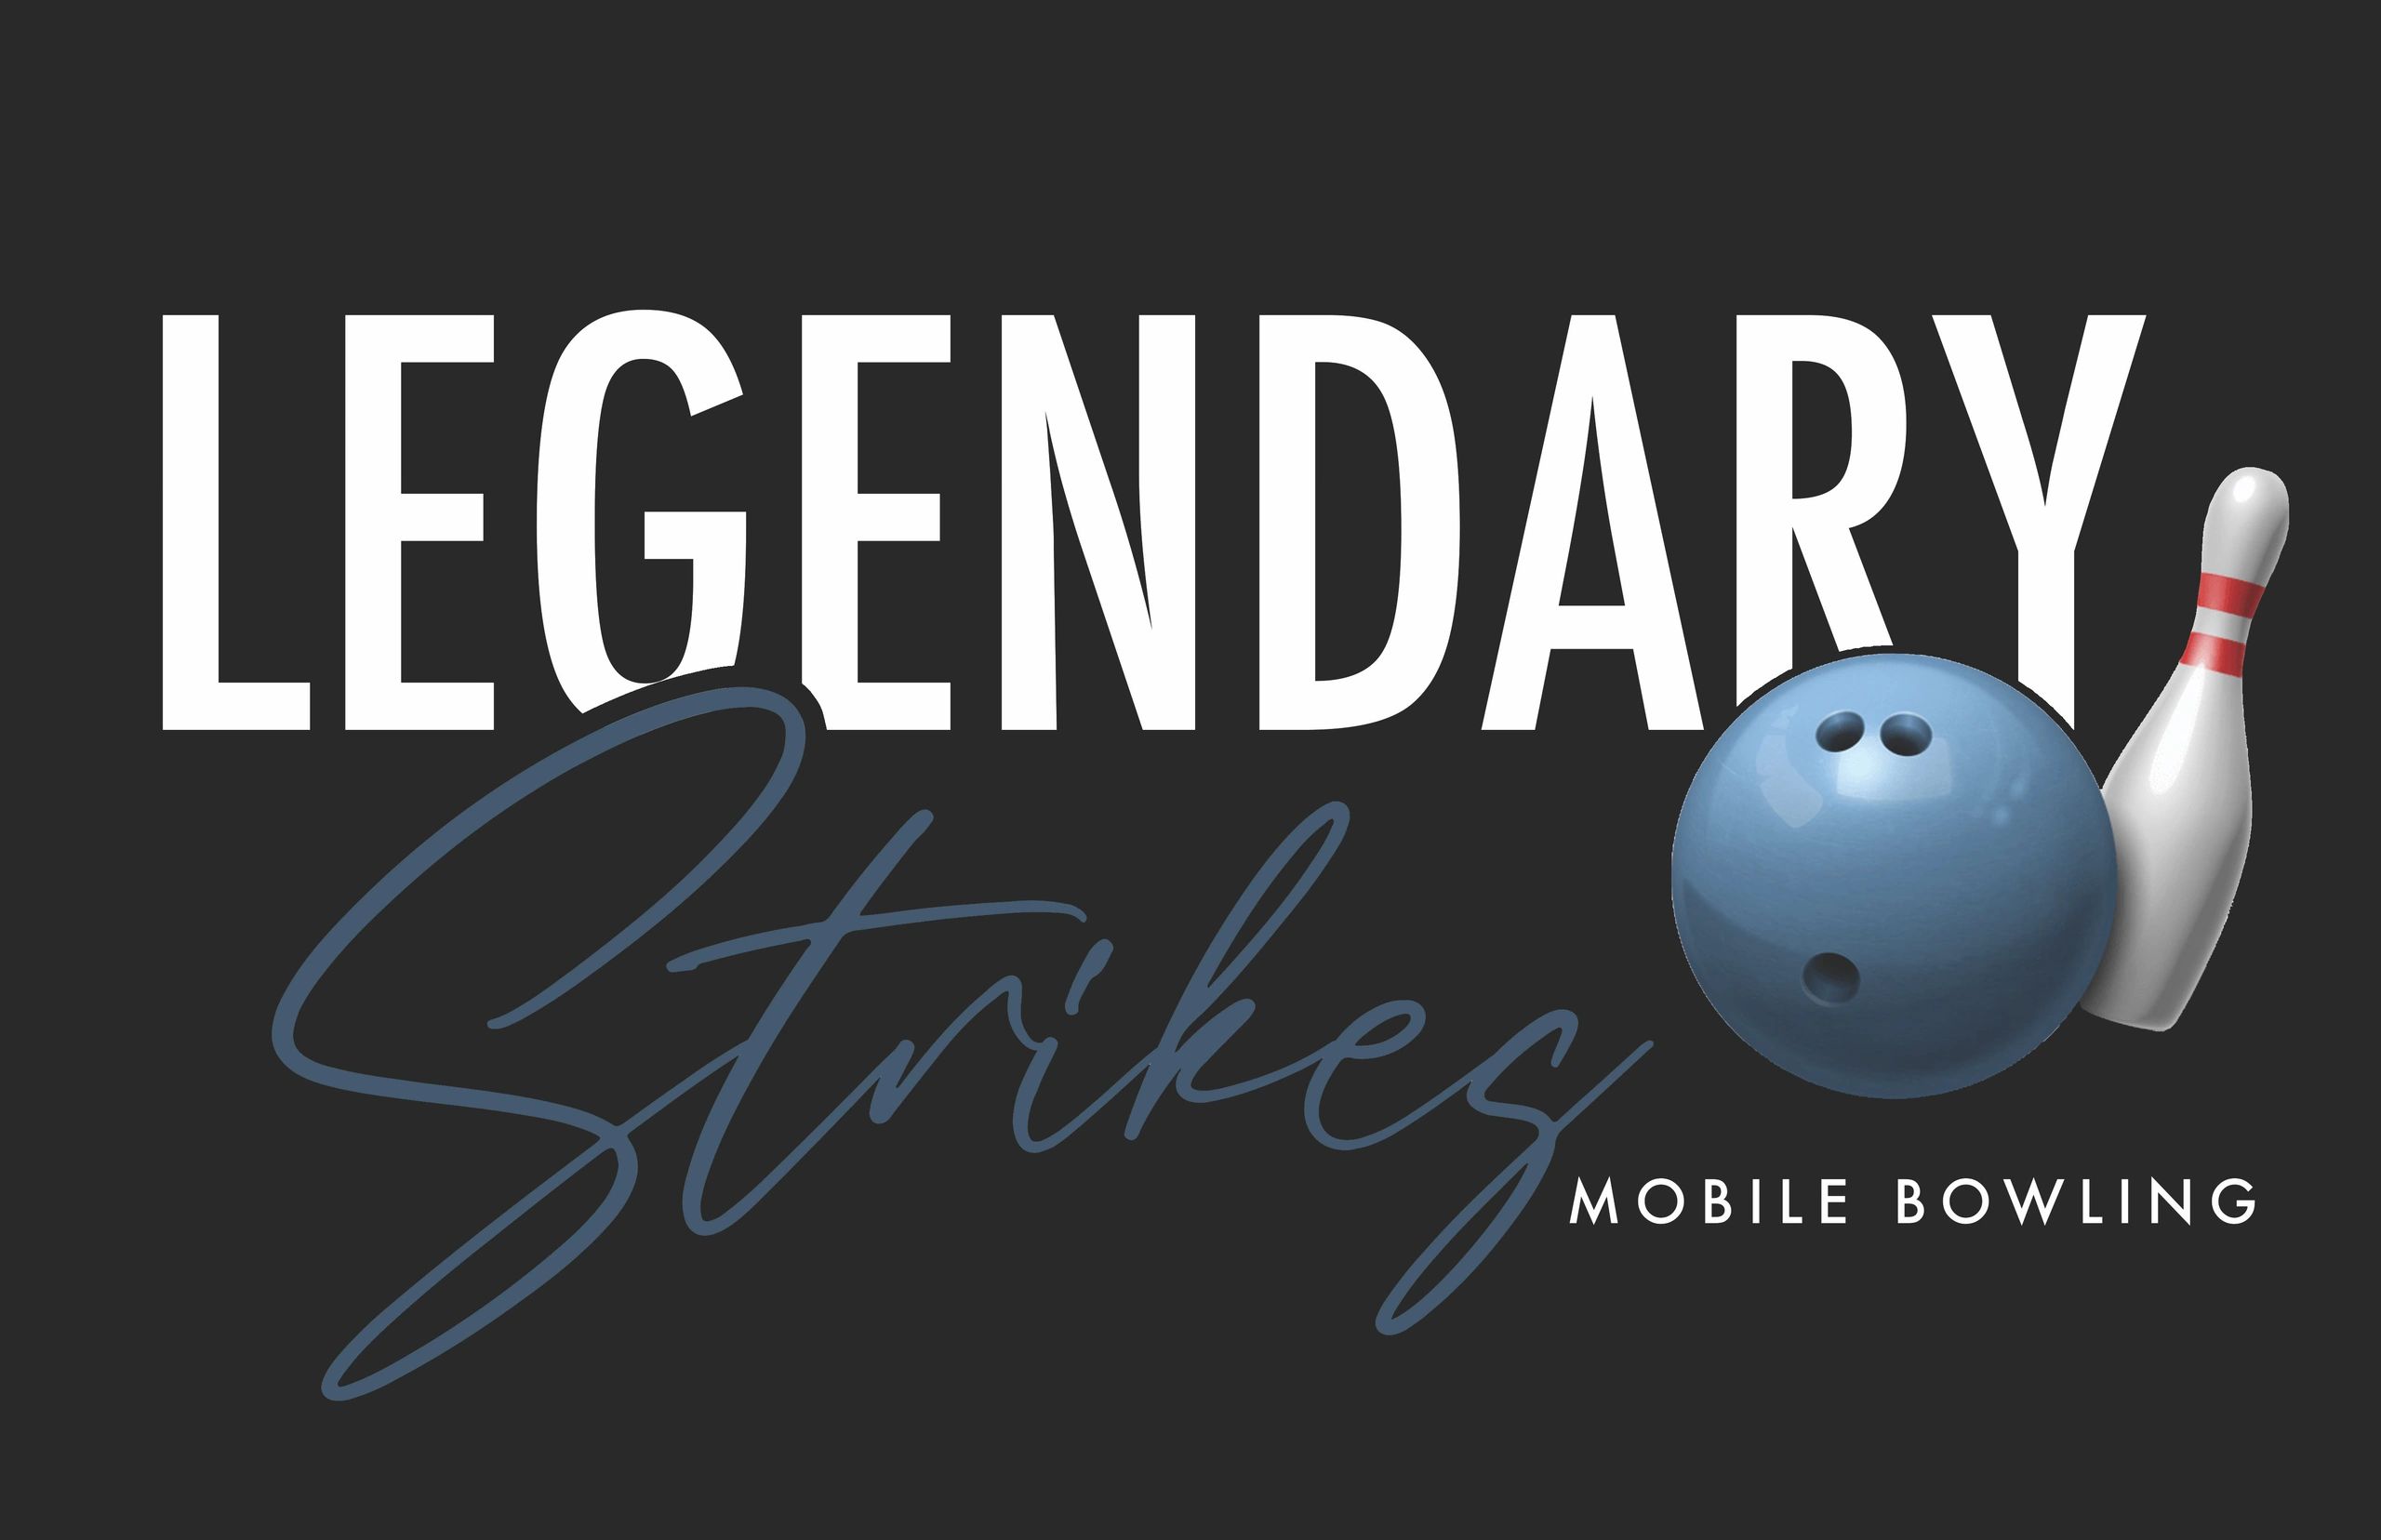 Legendary Strikes Mobile Bowling - GA